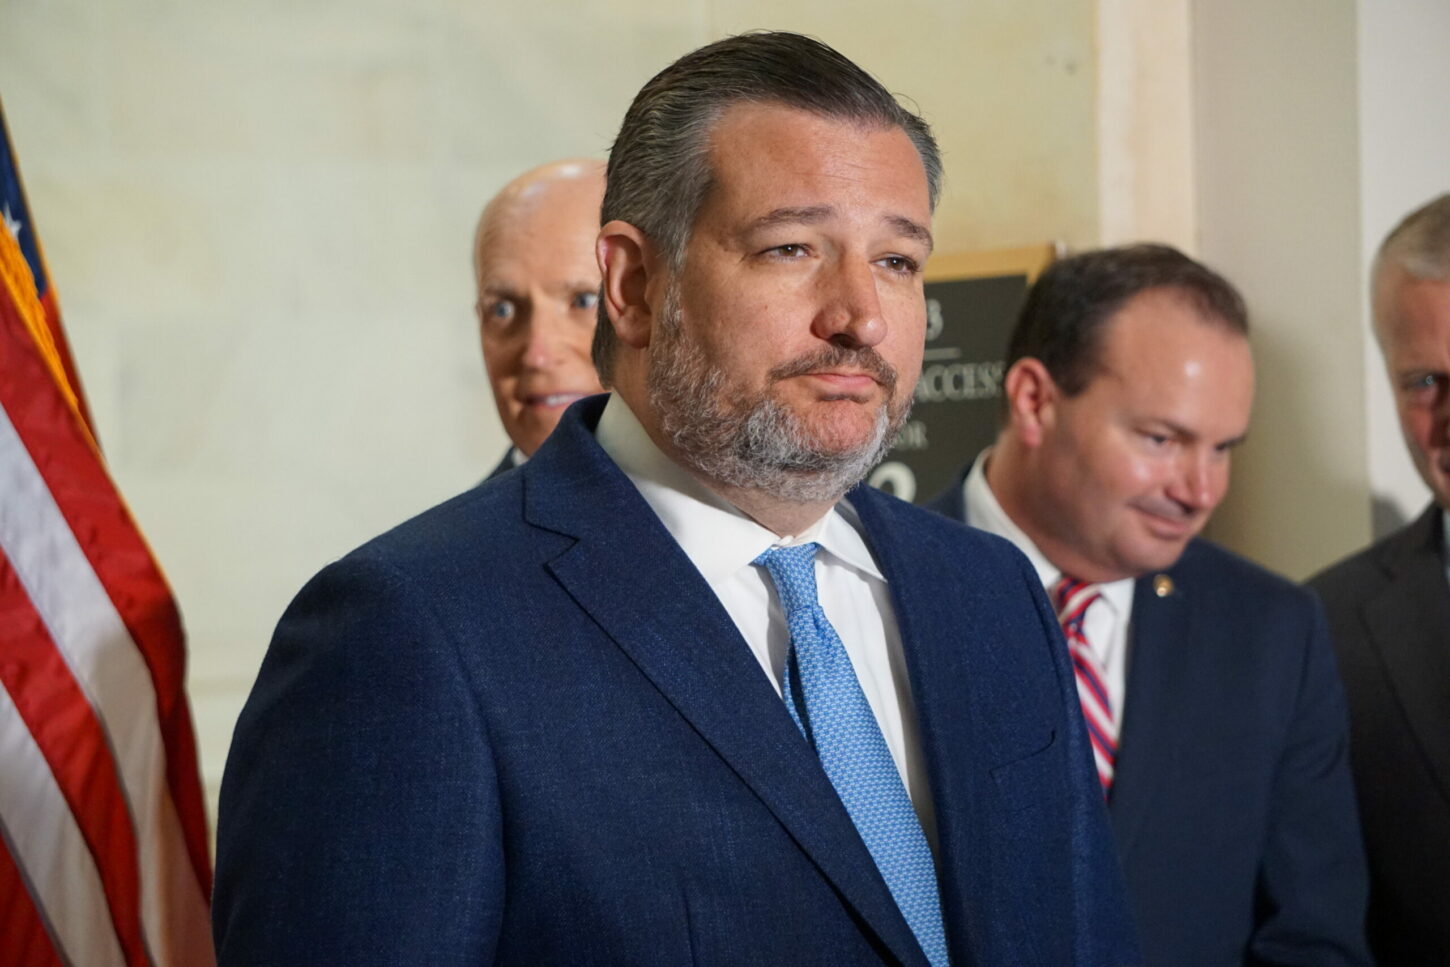 Ted Cruz says Texas should repeal its dormant ban on gay sex